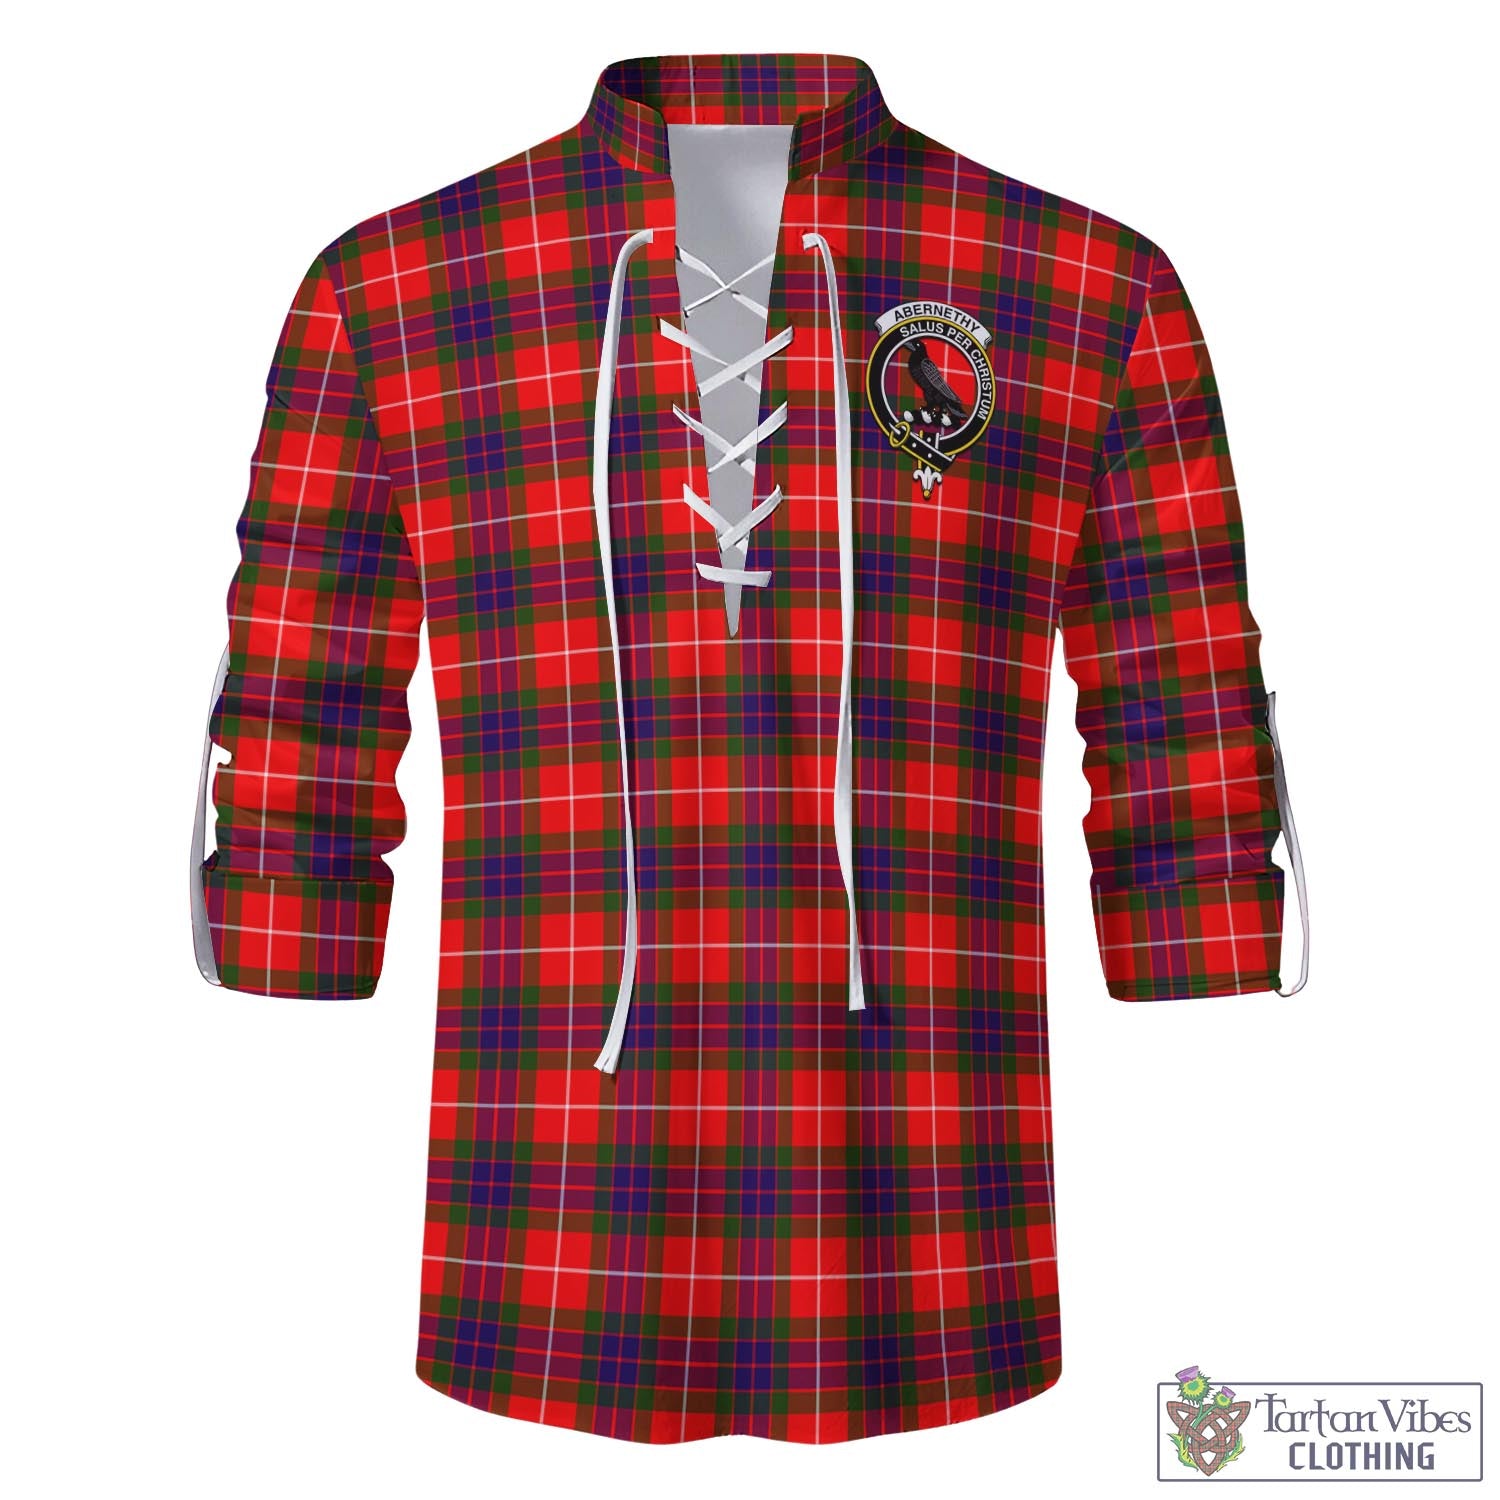 Tartan Vibes Clothing Abernethy Tartan Men's Scottish Traditional Jacobite Ghillie Kilt Shirt with Family Crest